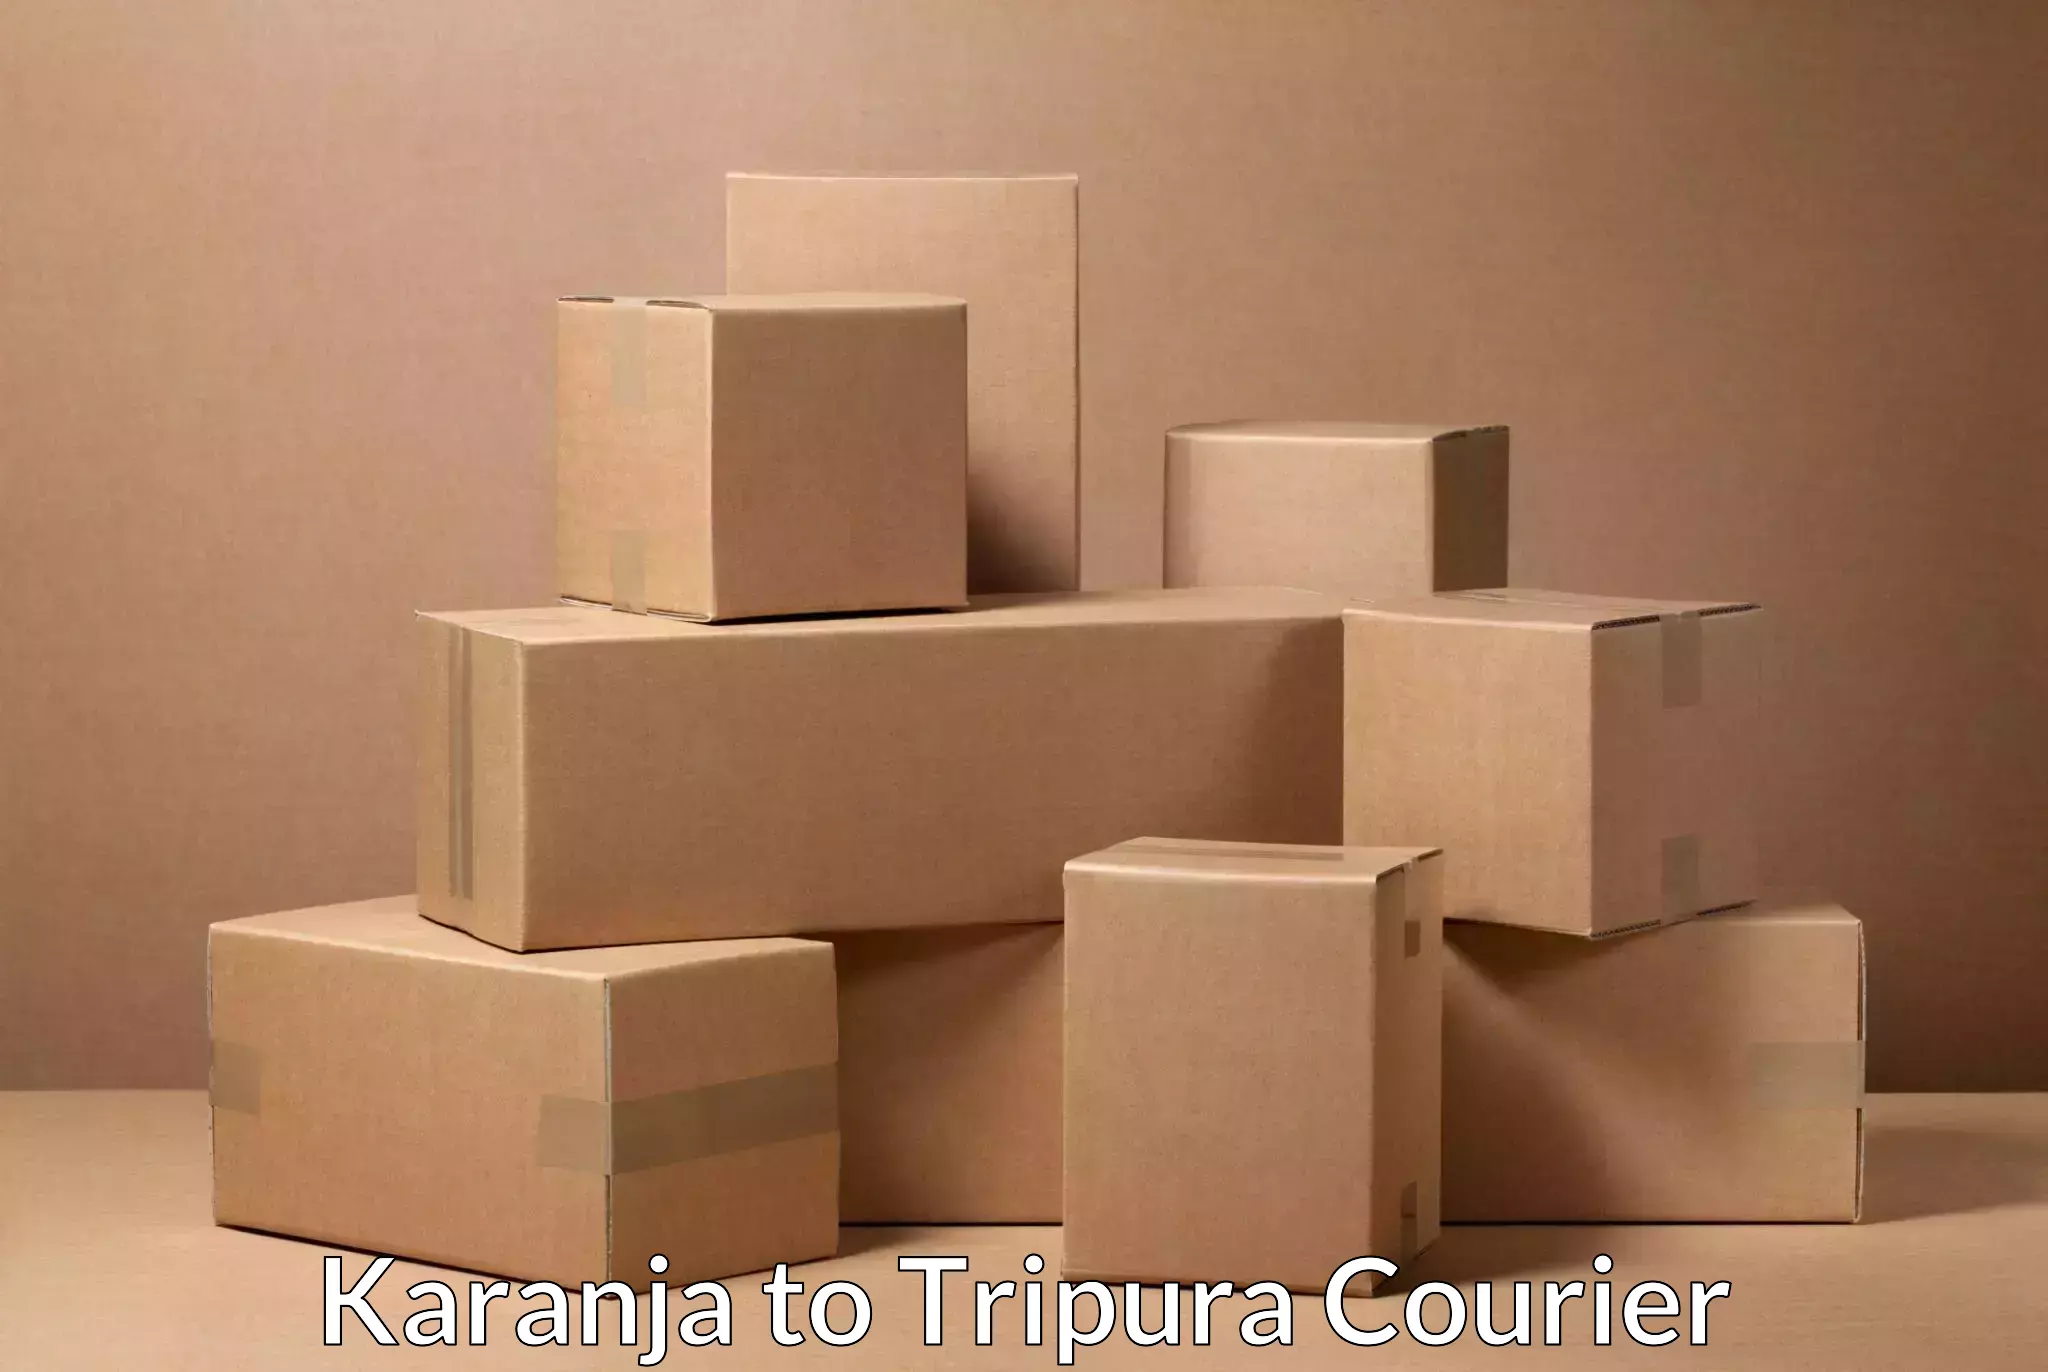 Cash on delivery service Karanja to Udaipur Tripura